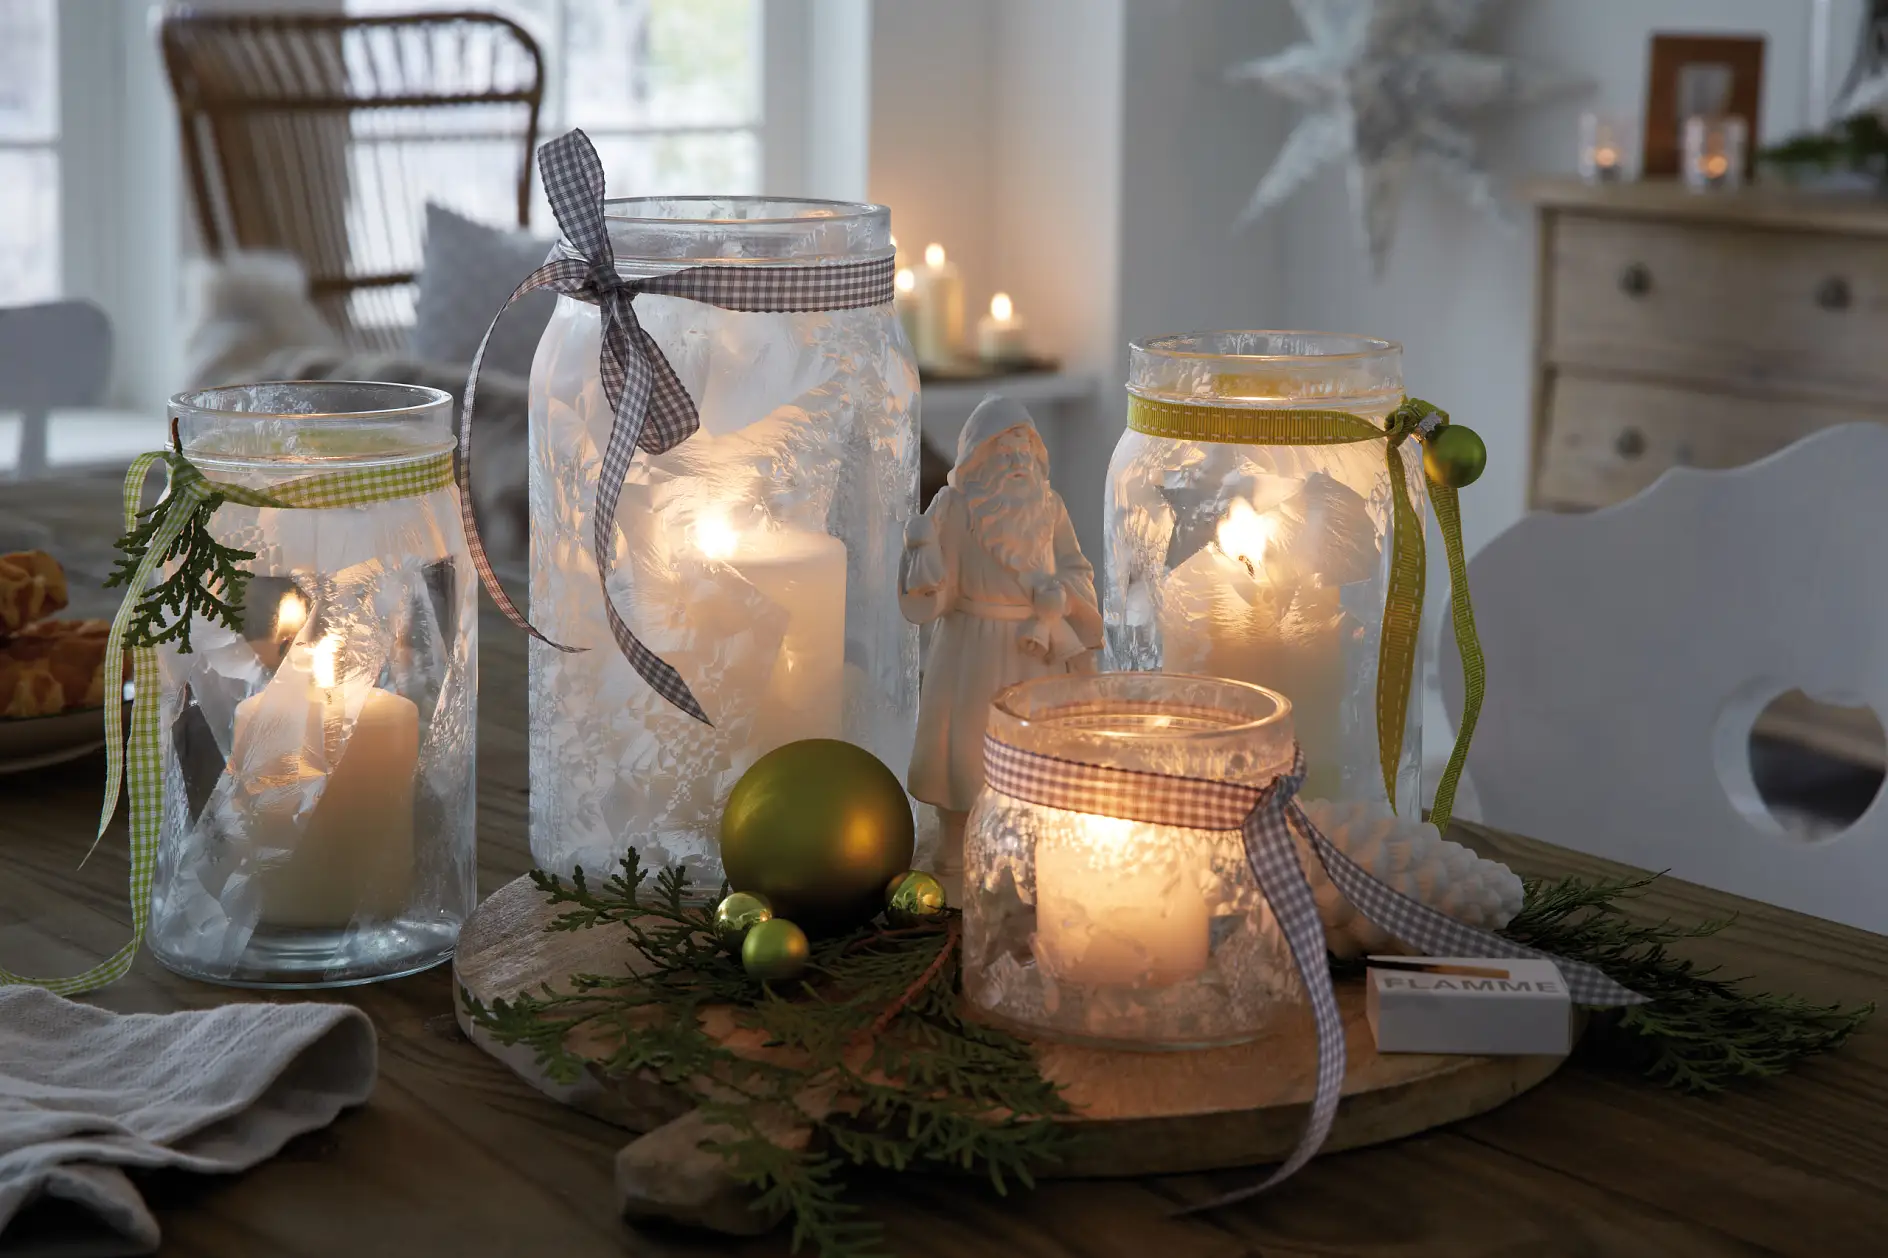 Enjoy your DIY icy lanterns!